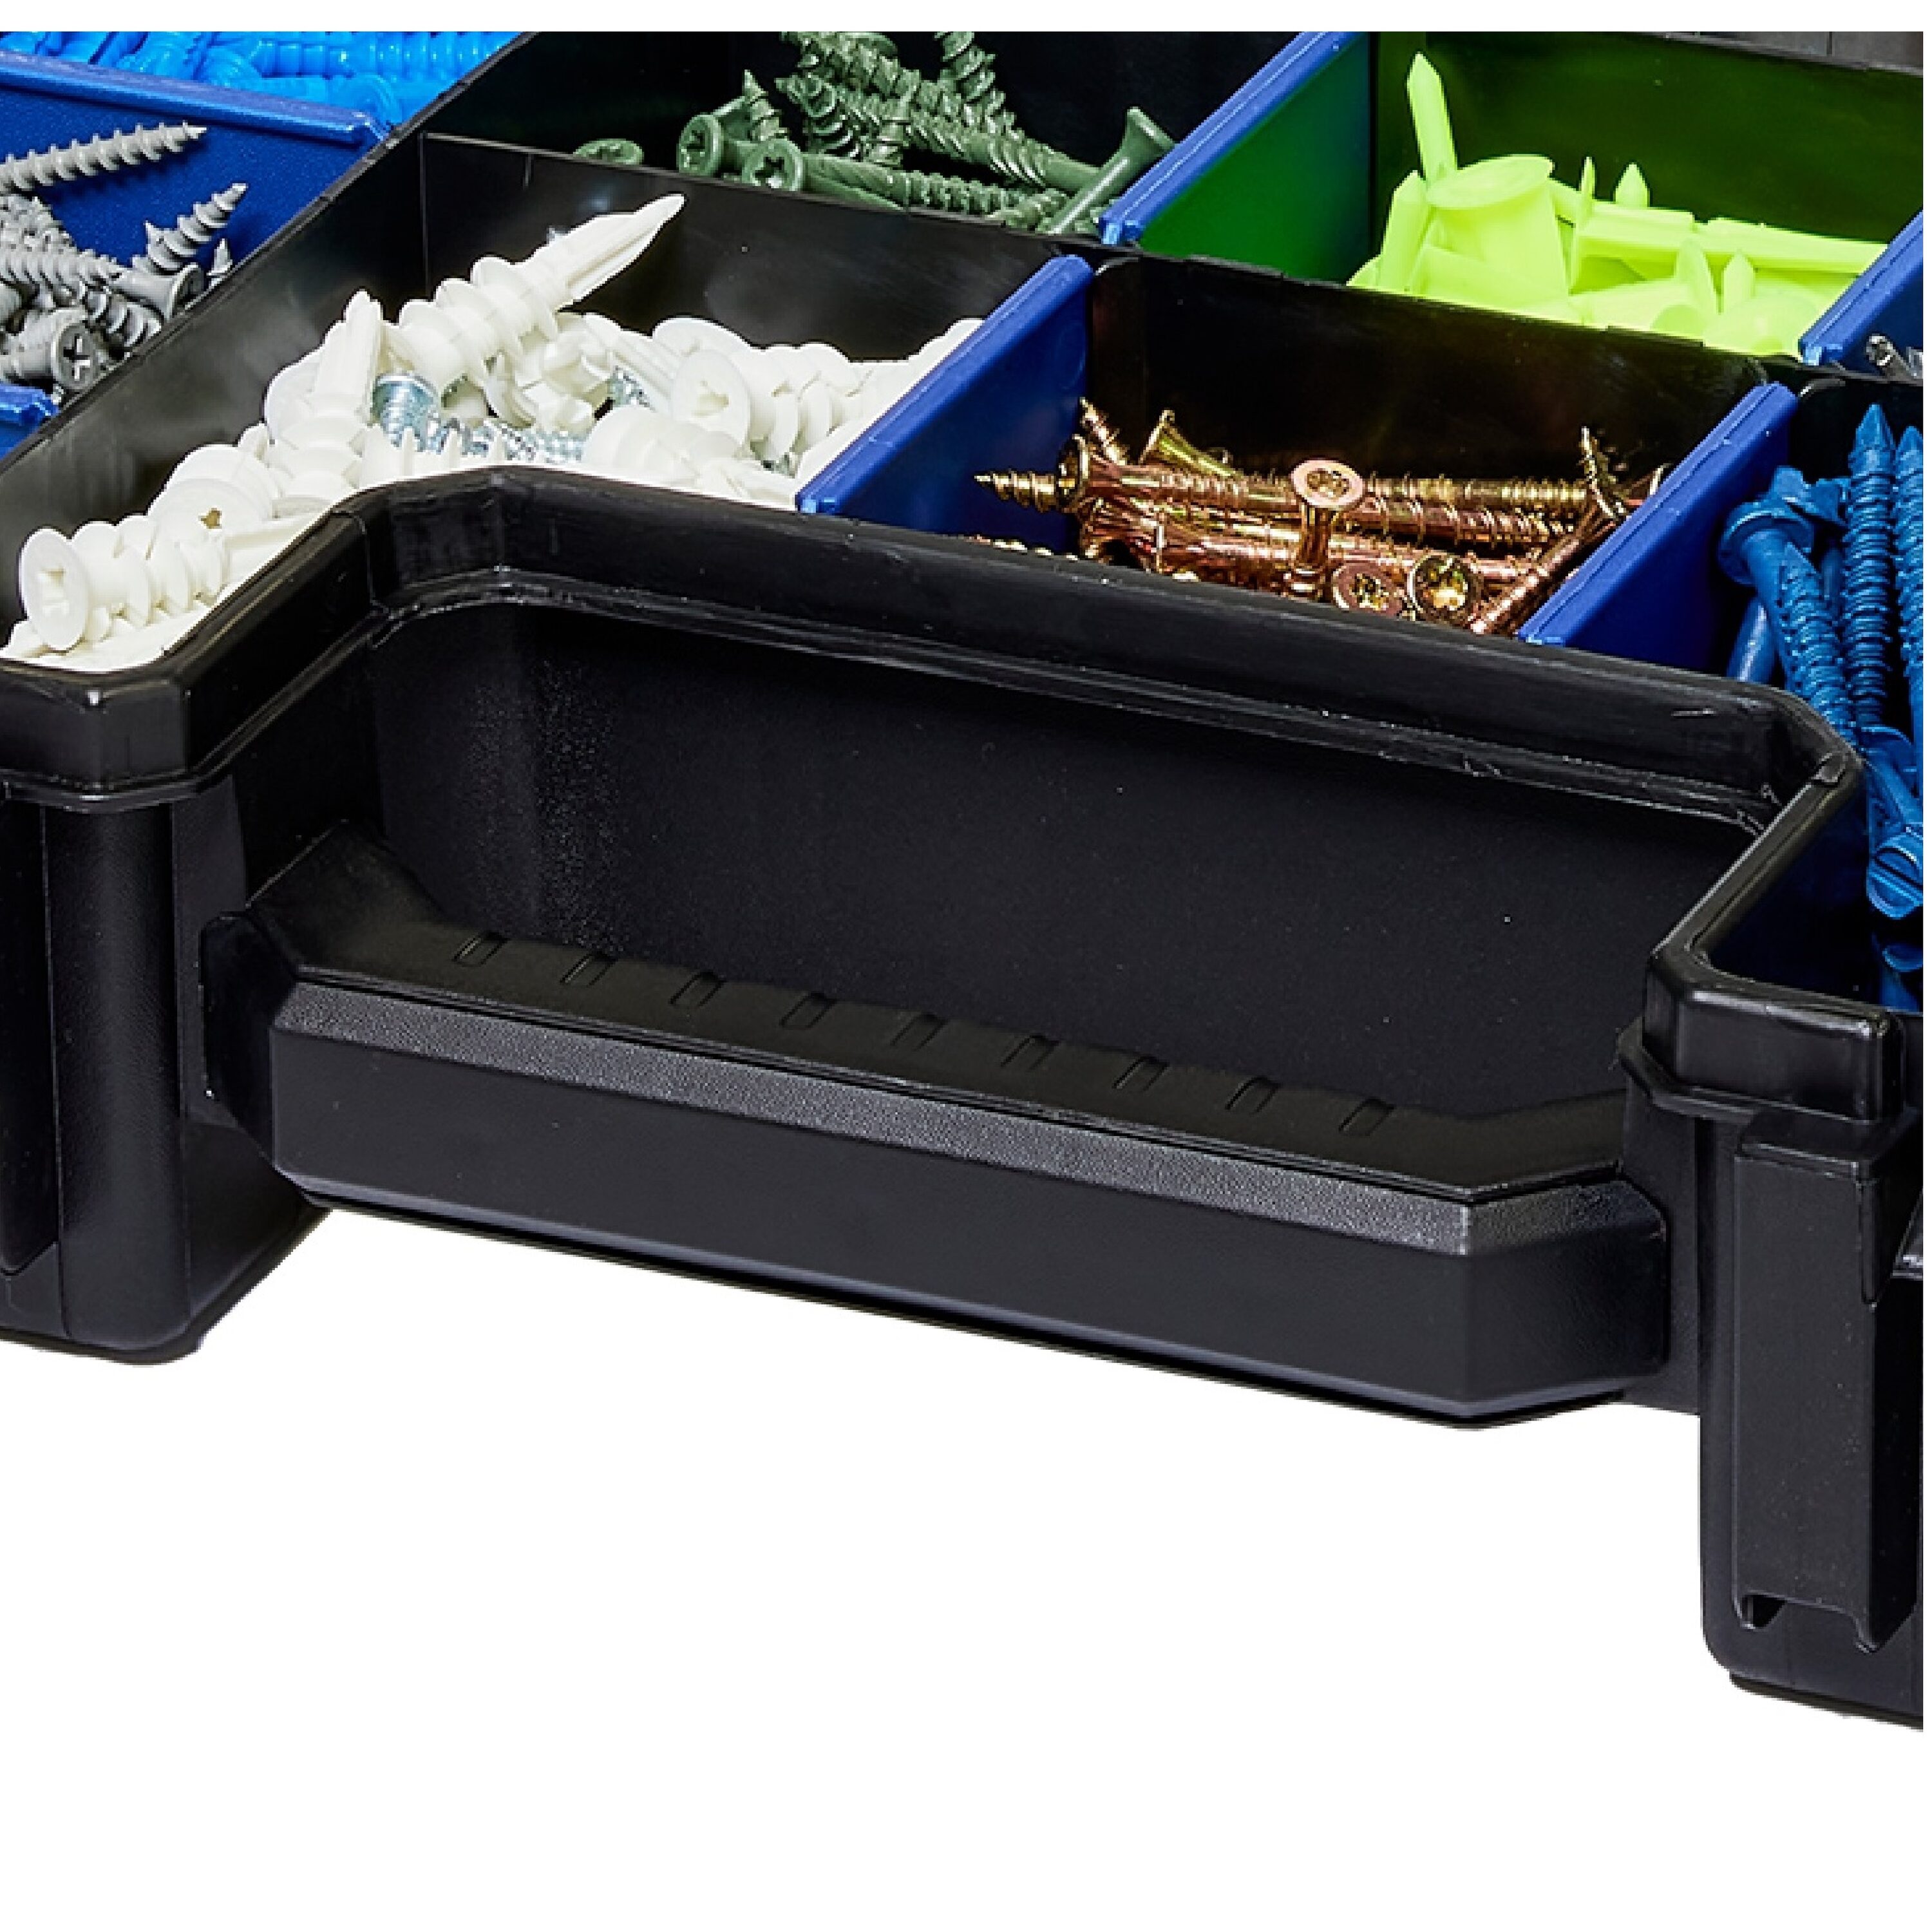 Kobalt Plastic 15-Compartment Plastic Small Parts Organizer in the Small  Parts Organizers department at